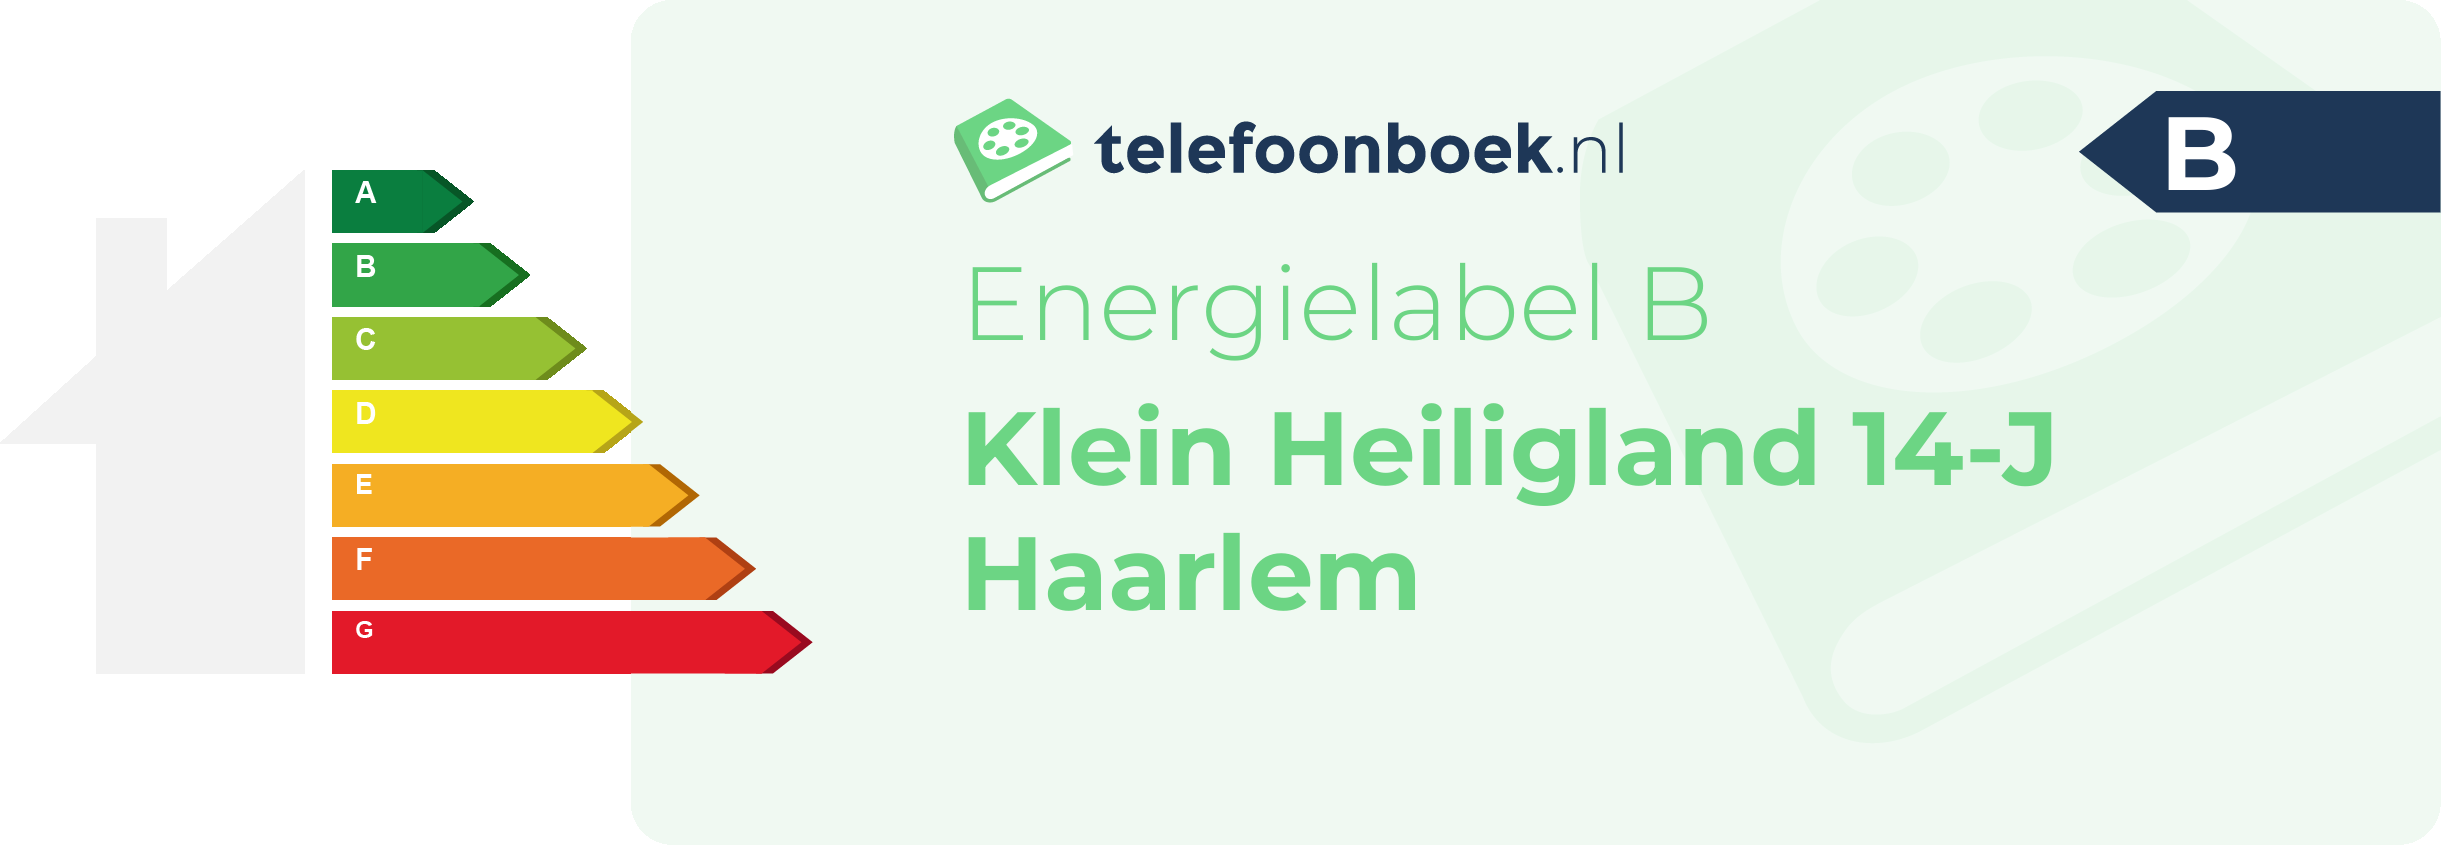 Energielabel Klein Heiligland 14-J Haarlem